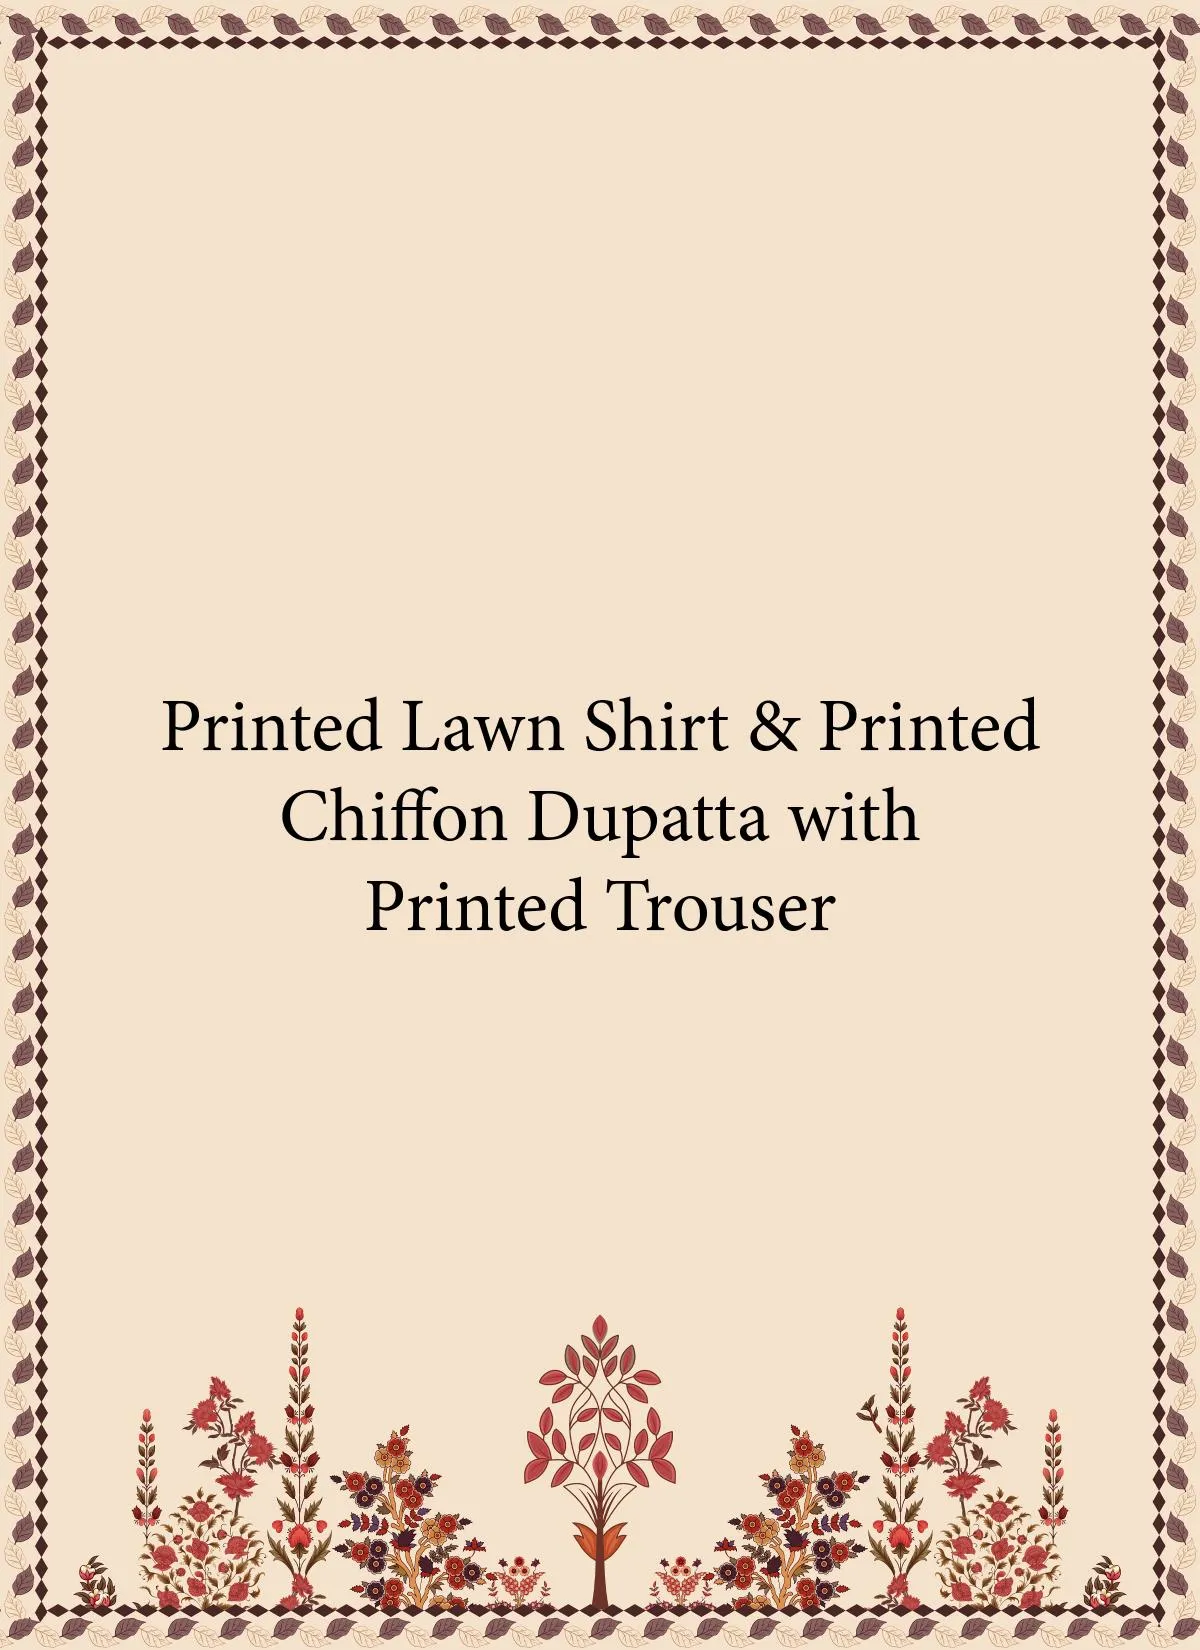 Printed lawn shirt and printed chiffon dupatta with printed trouser